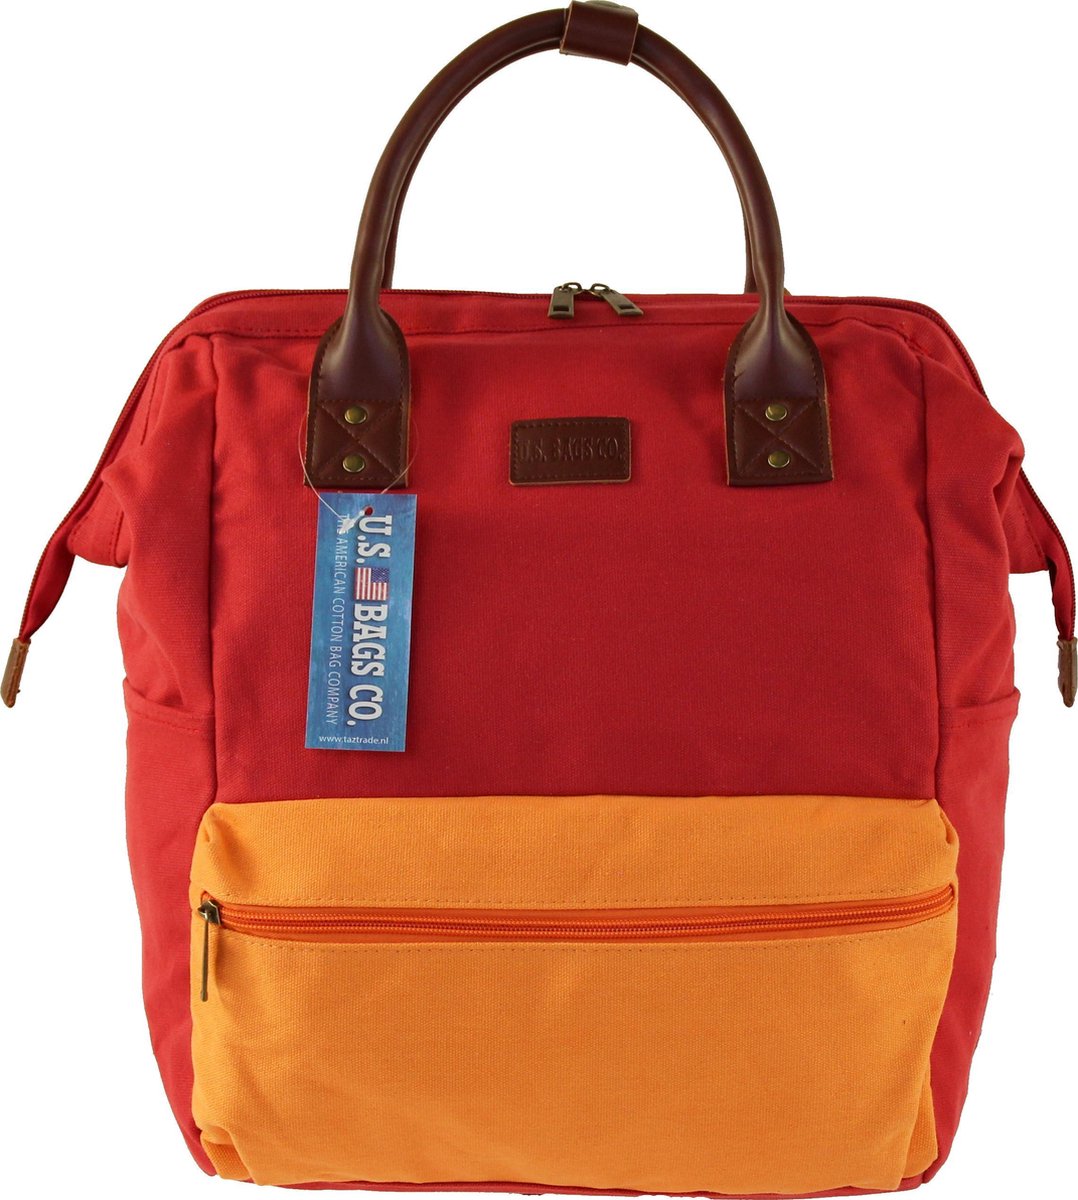 US Bags Canvas rugzak met laptopvak rood/oranje | bol.com